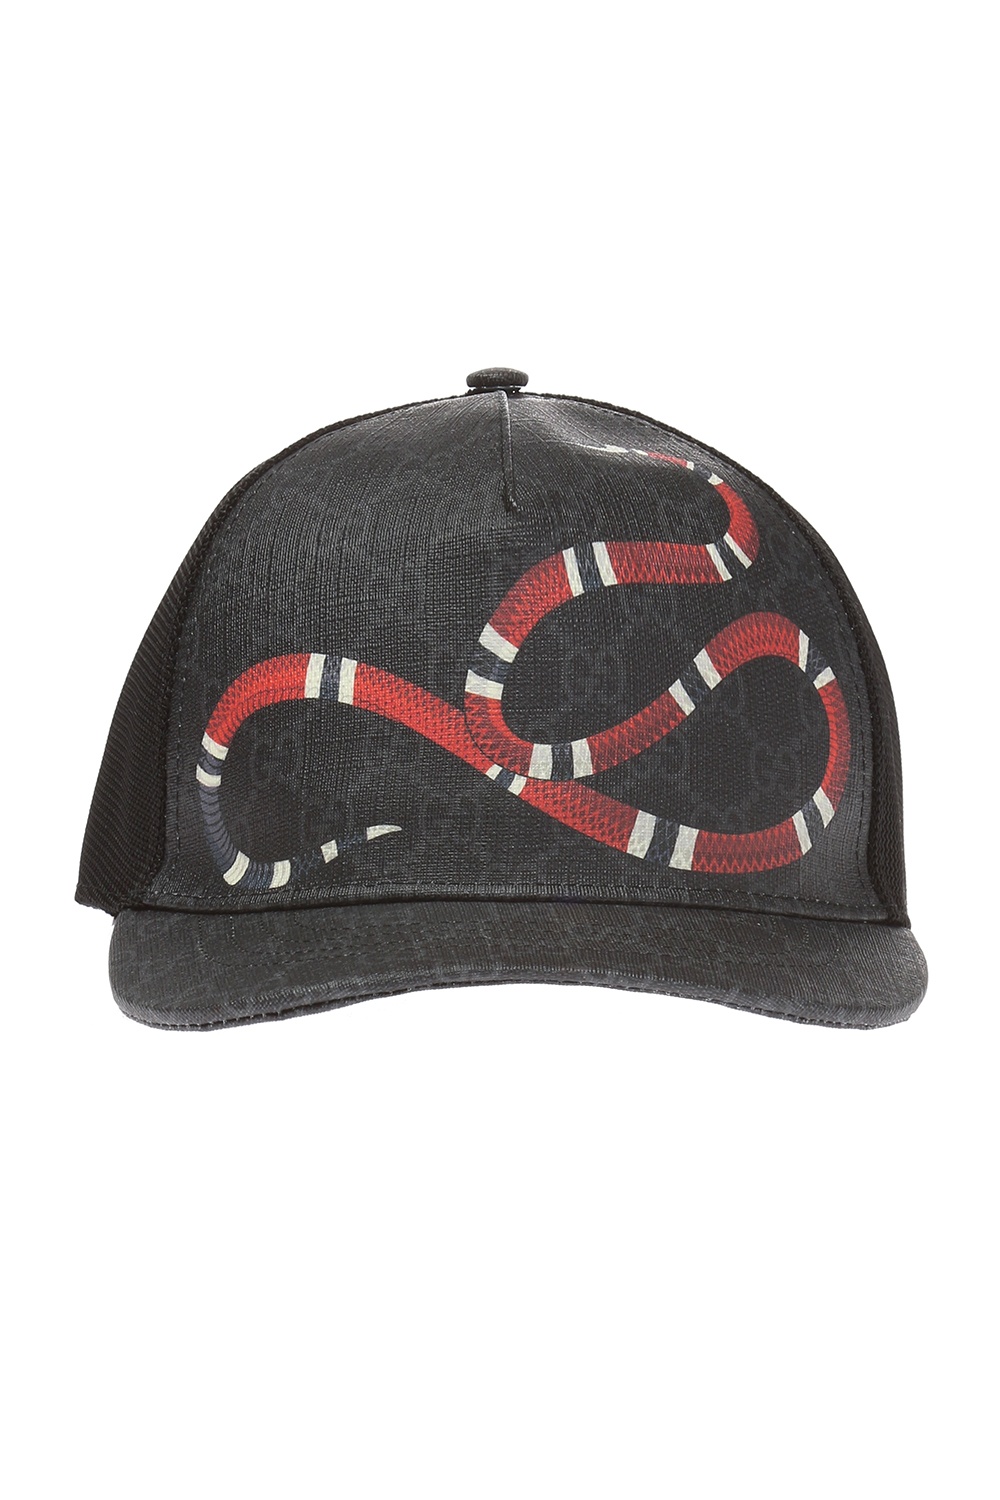 gucci baseball cap snake